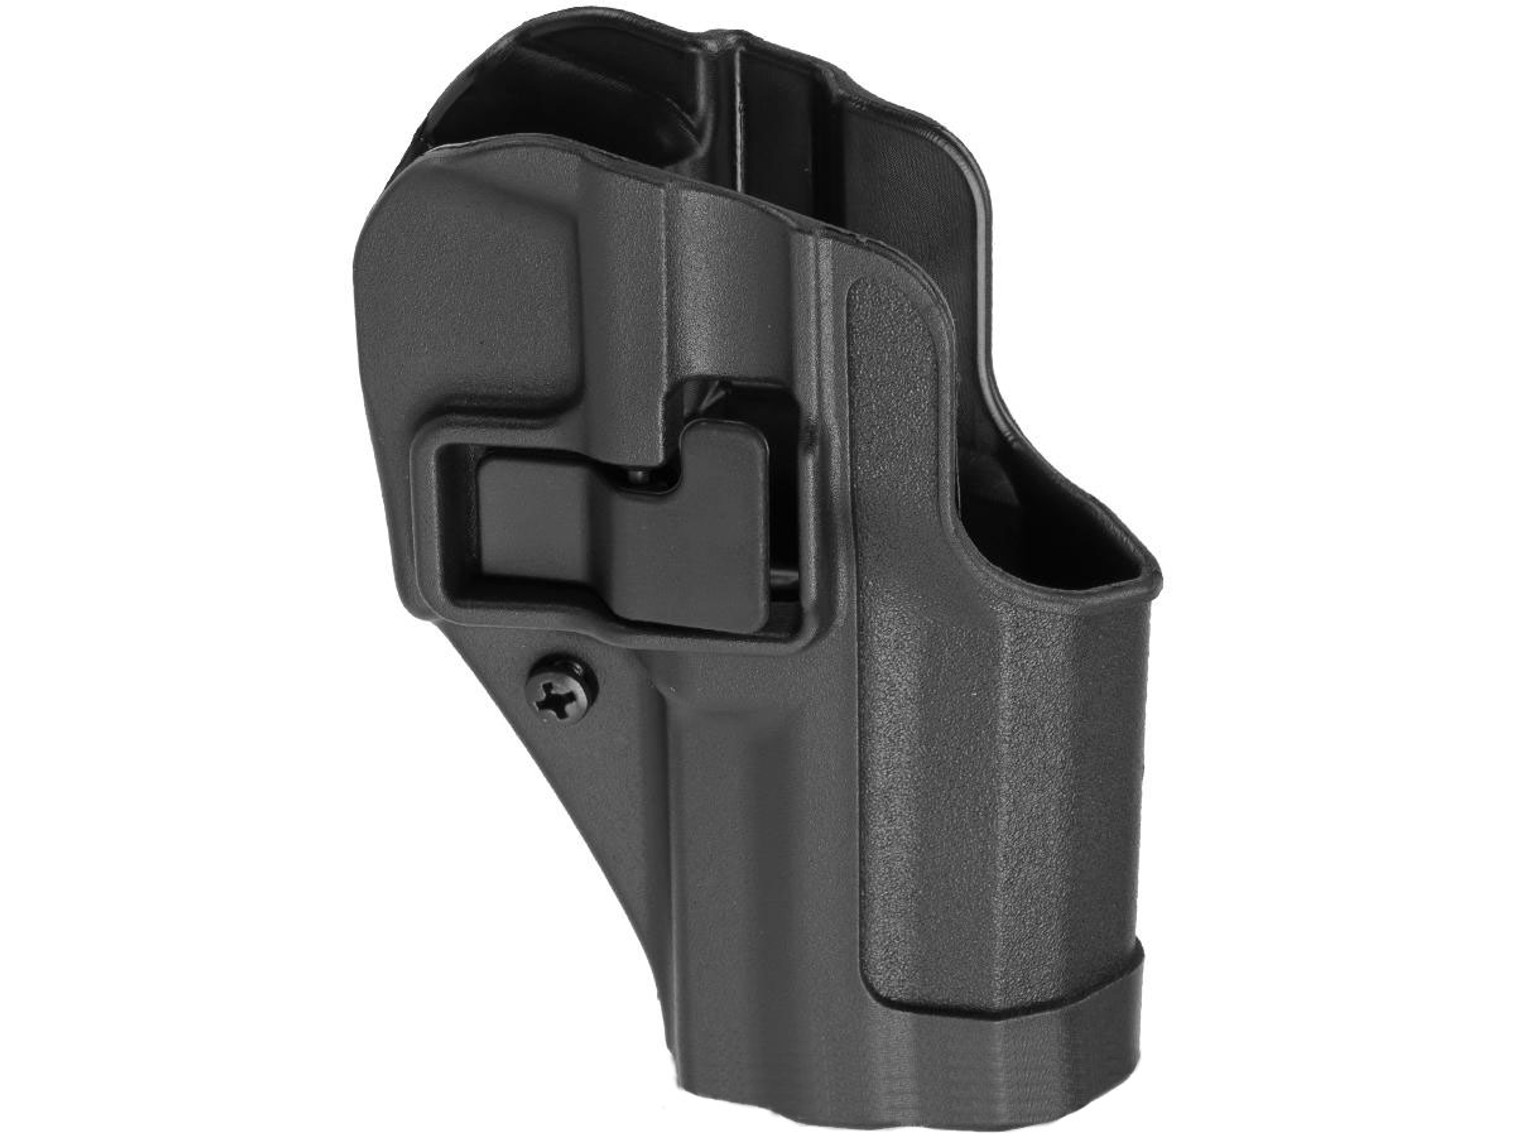 Blackhawk! Serpa CQC Concealment Holster for Heckler and Koch Full Size USP Handguns 9mm / .40 Caliber - Black (Hand: Right)